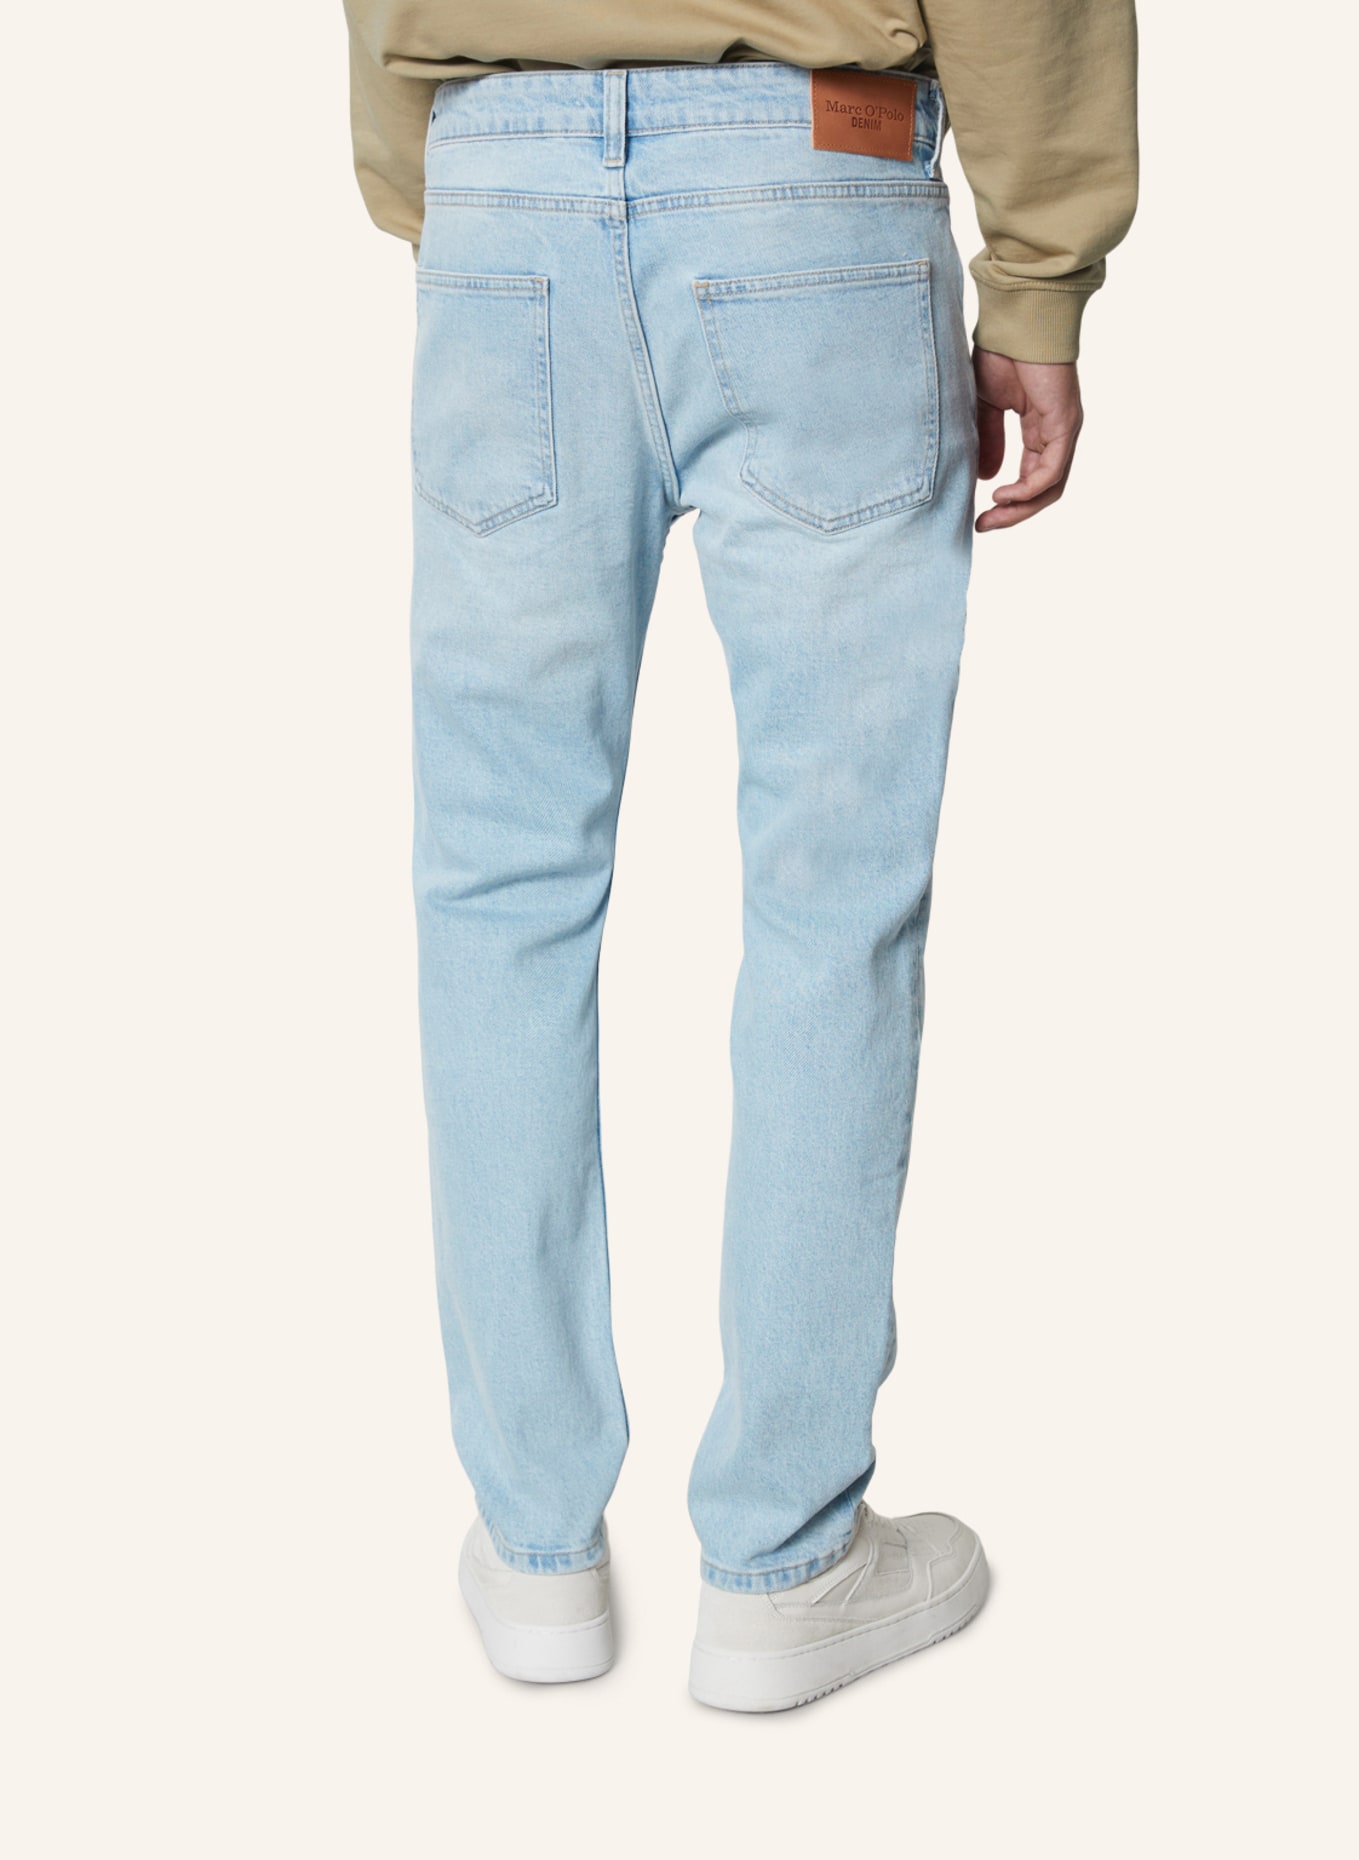 Marc O'Polo DENIM Jeans Modell VIDAR slim, Farbe: BLAU (Bild 2)